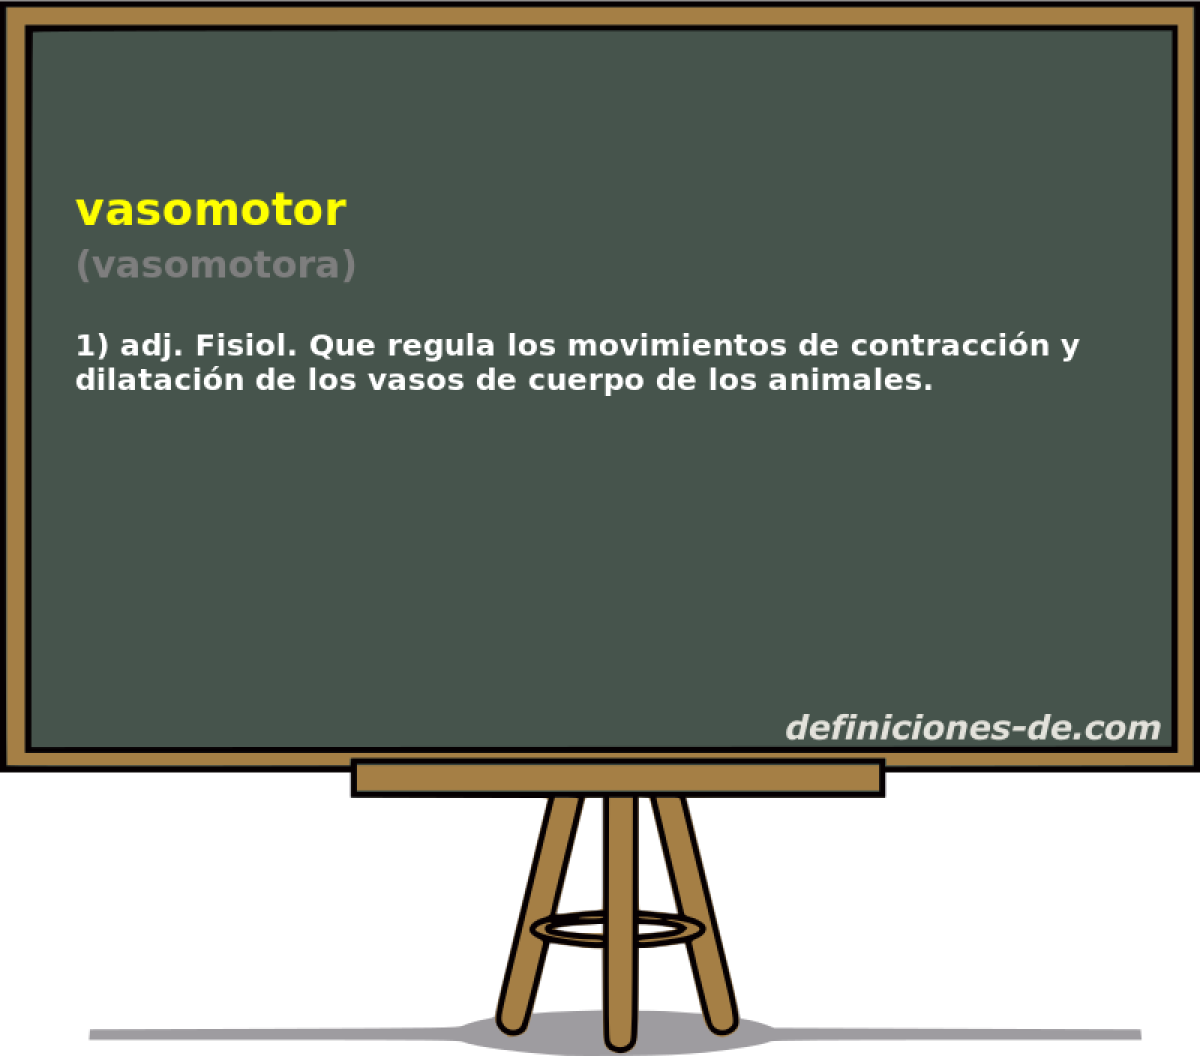 vasomotor (vasomotora)